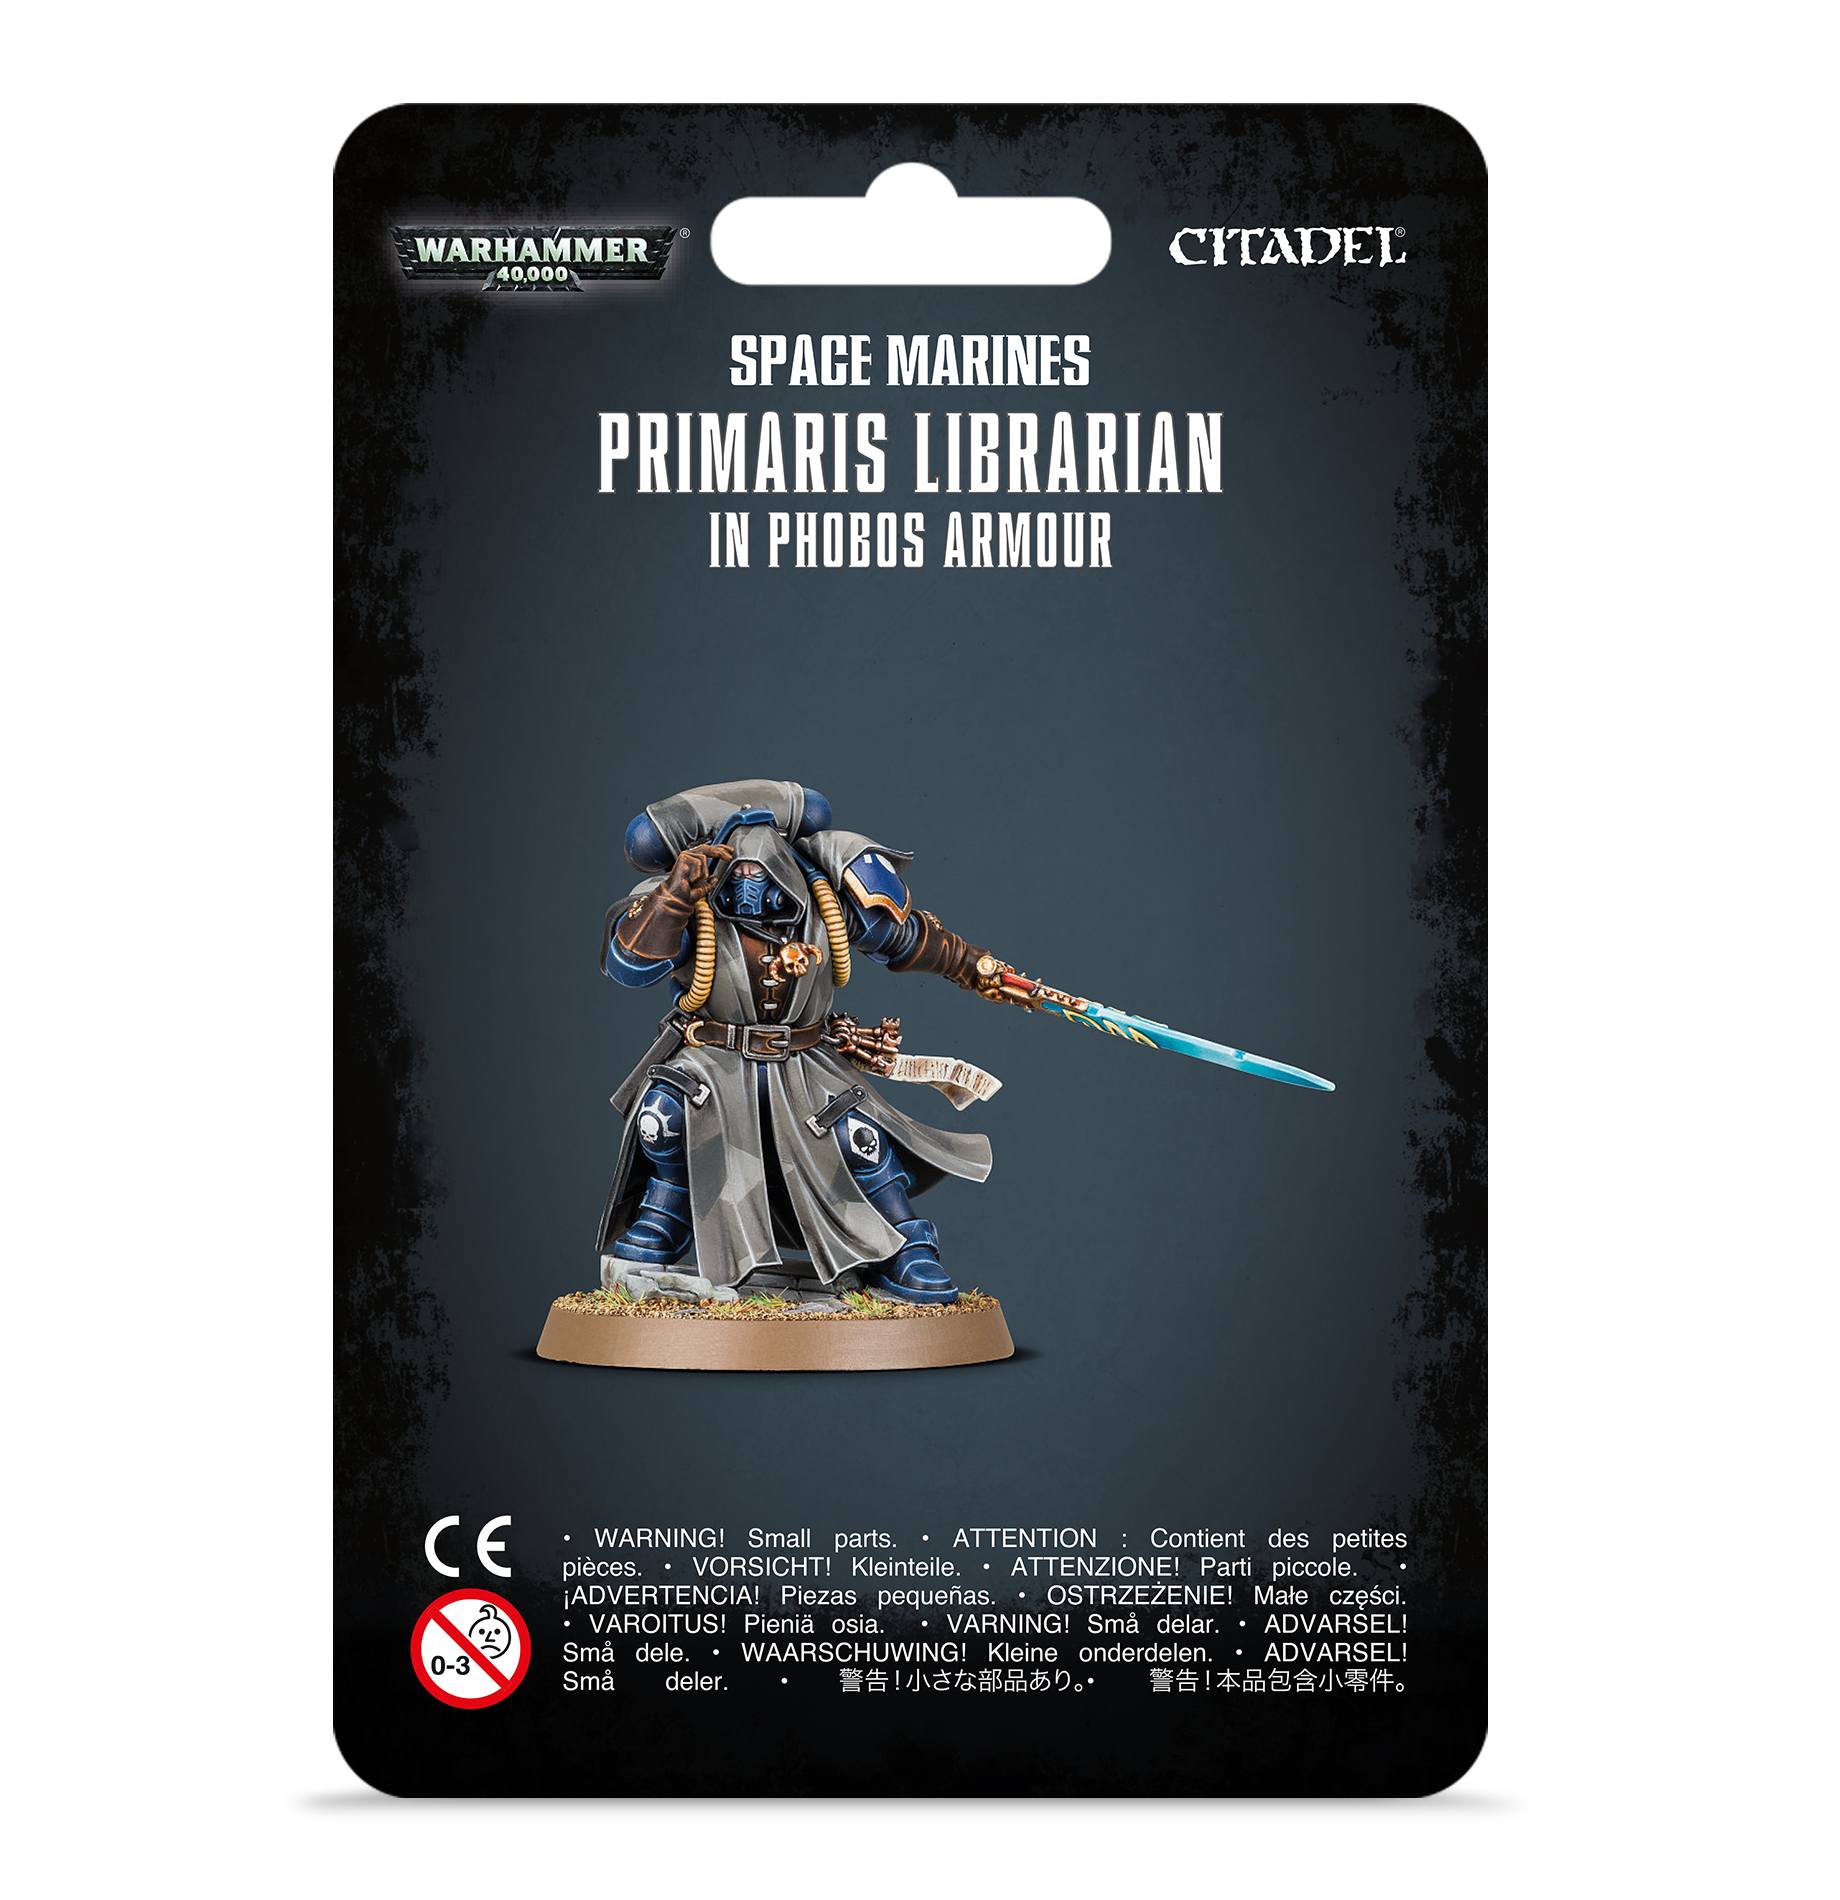 Primaris Librarian in Phobos Armour -48-67- Space Marines - Warhammer 40.000